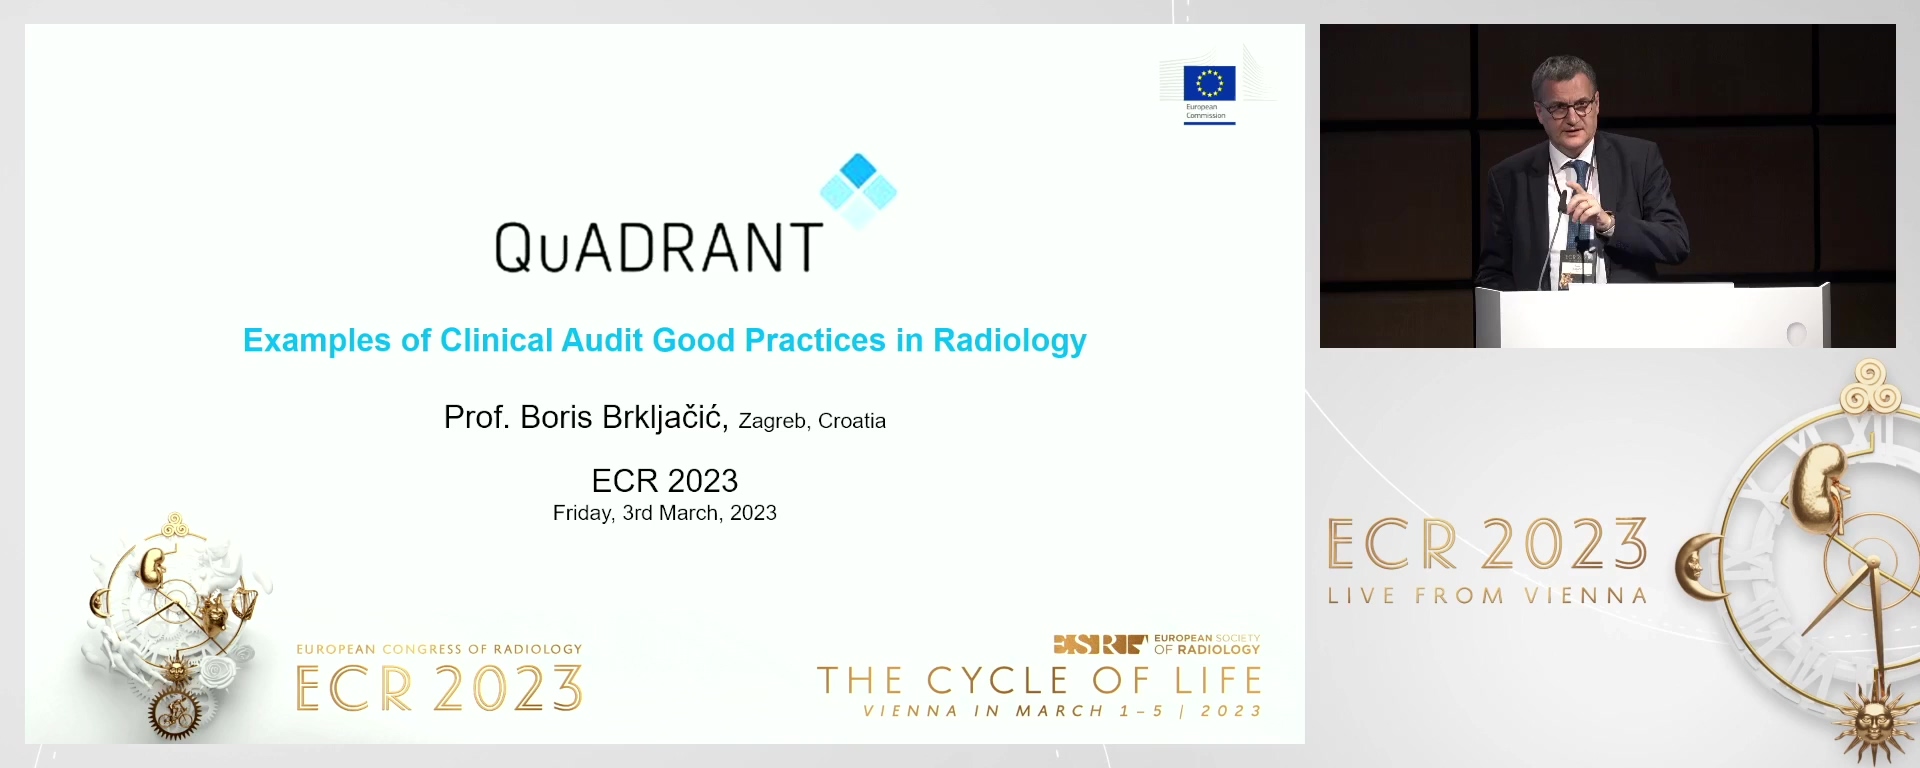 QUADRANT: examples of clinical audit good practices in radiology - Boris Brkljačić, Zagreb / HR